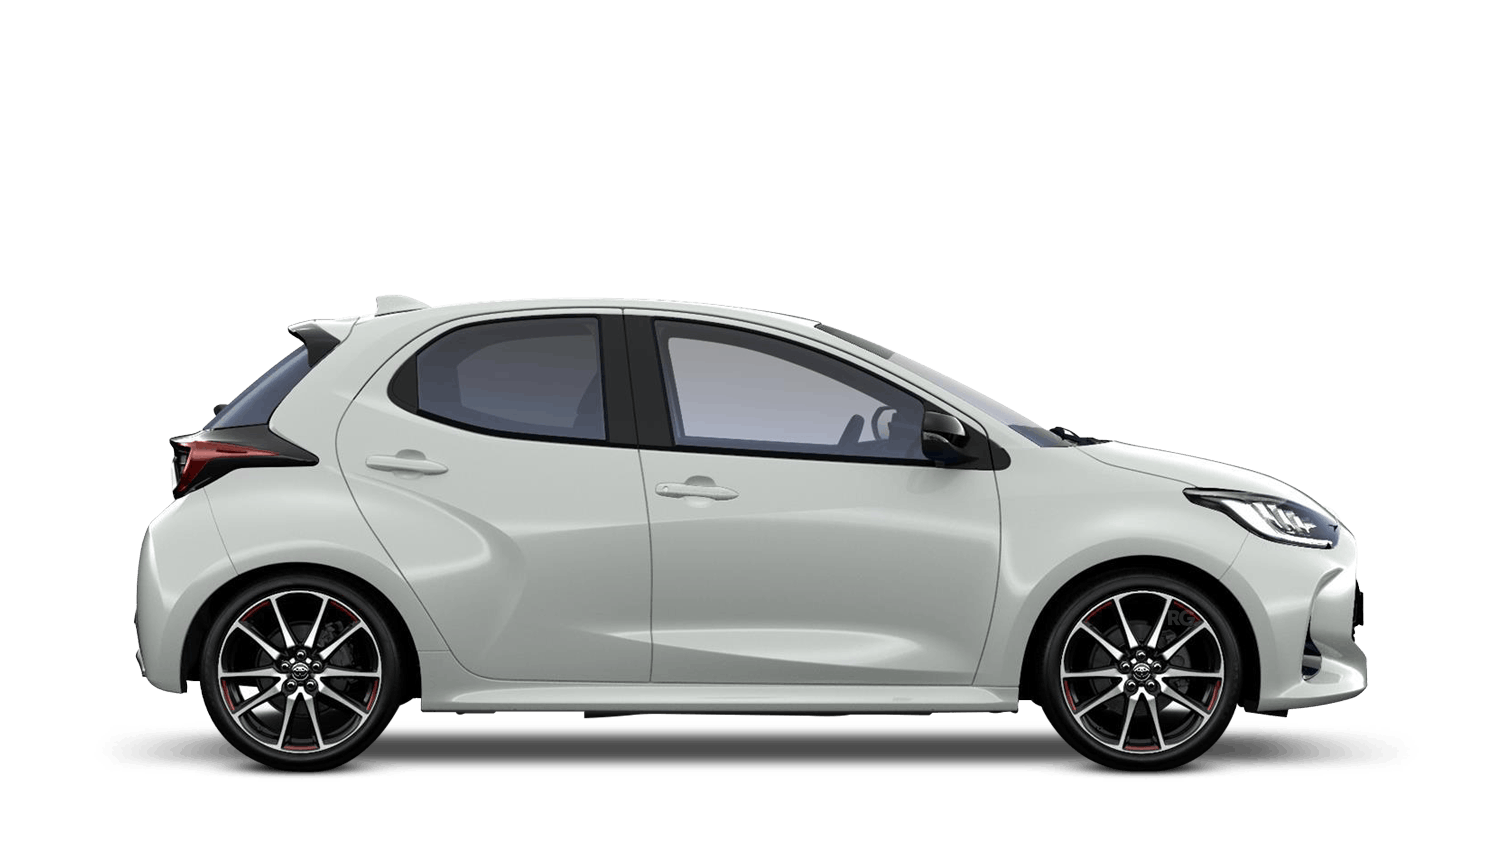 Toyota Yaris New Car Offers